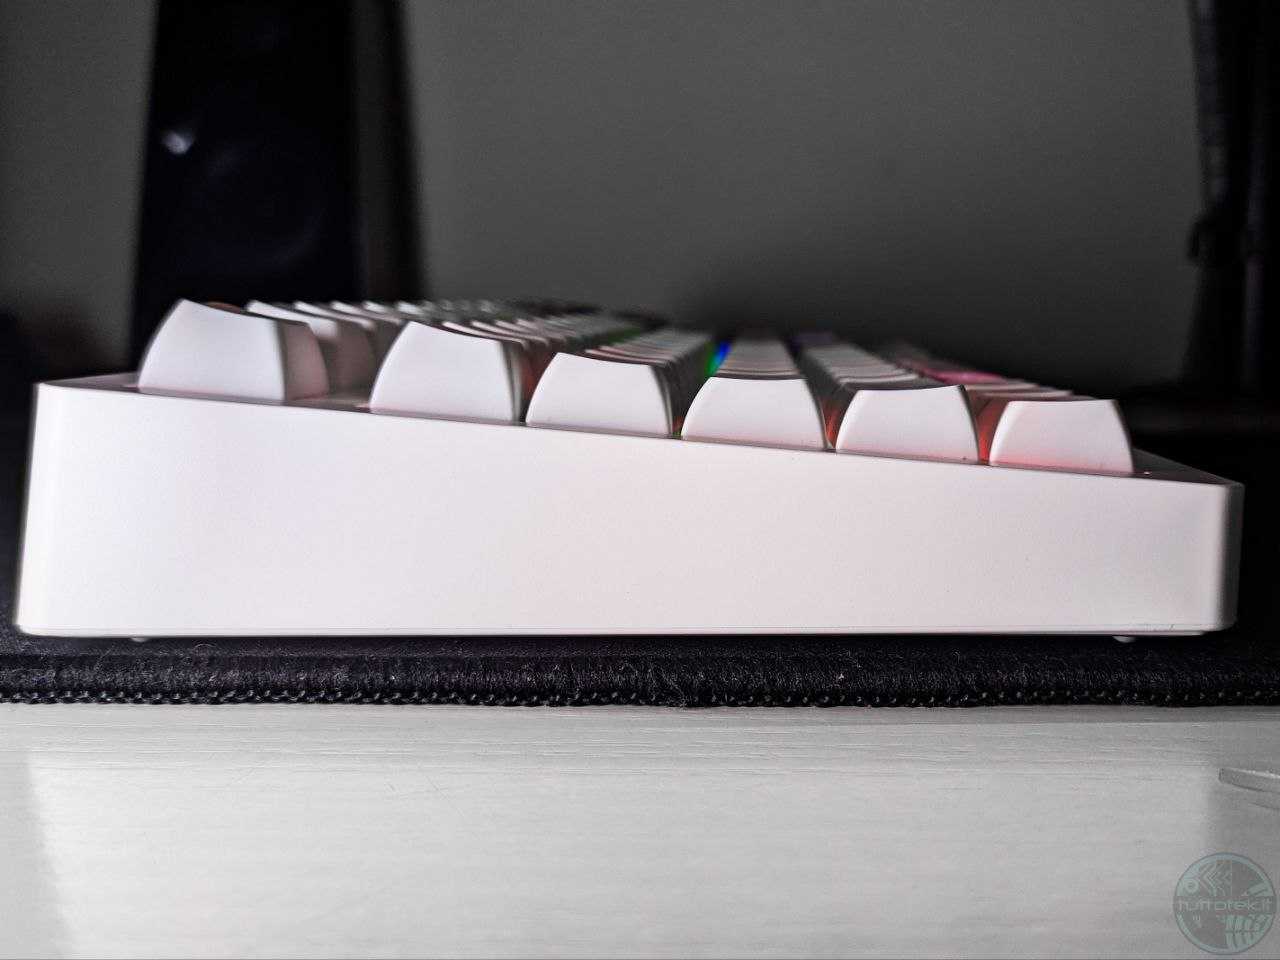 Akko PC75B Plus v2 review: the perfect keyboard?